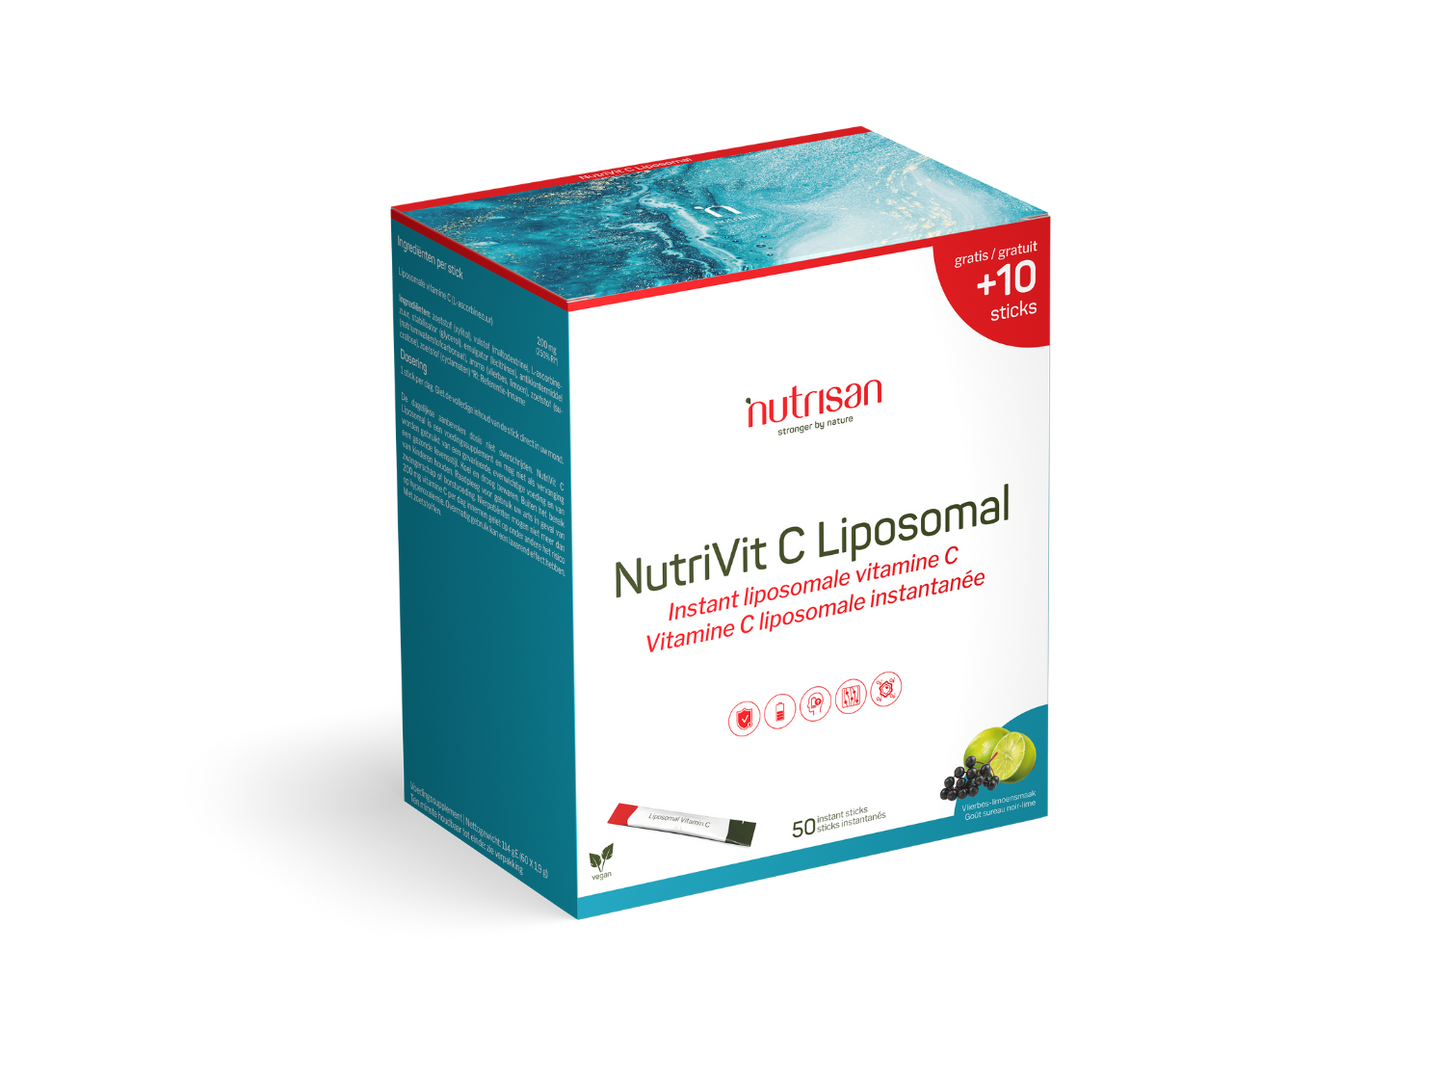 Nutrisan NutriVit C Liposomal - Vitamine C - Supplement bij stress en vermoeidheid